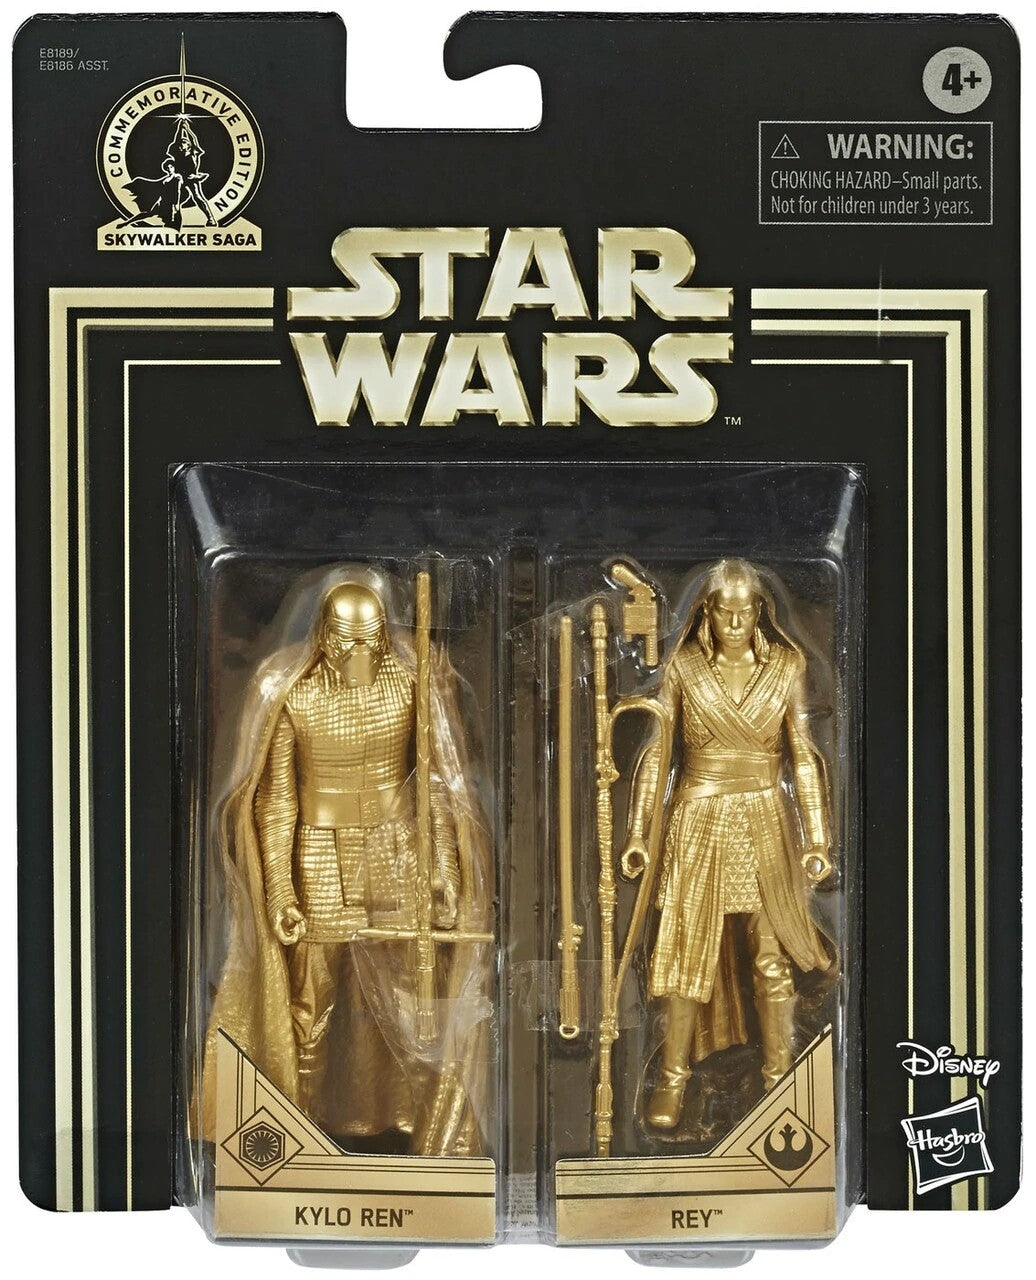 Star Wars: Skywalker Saga Figures (Commemorative Edition)